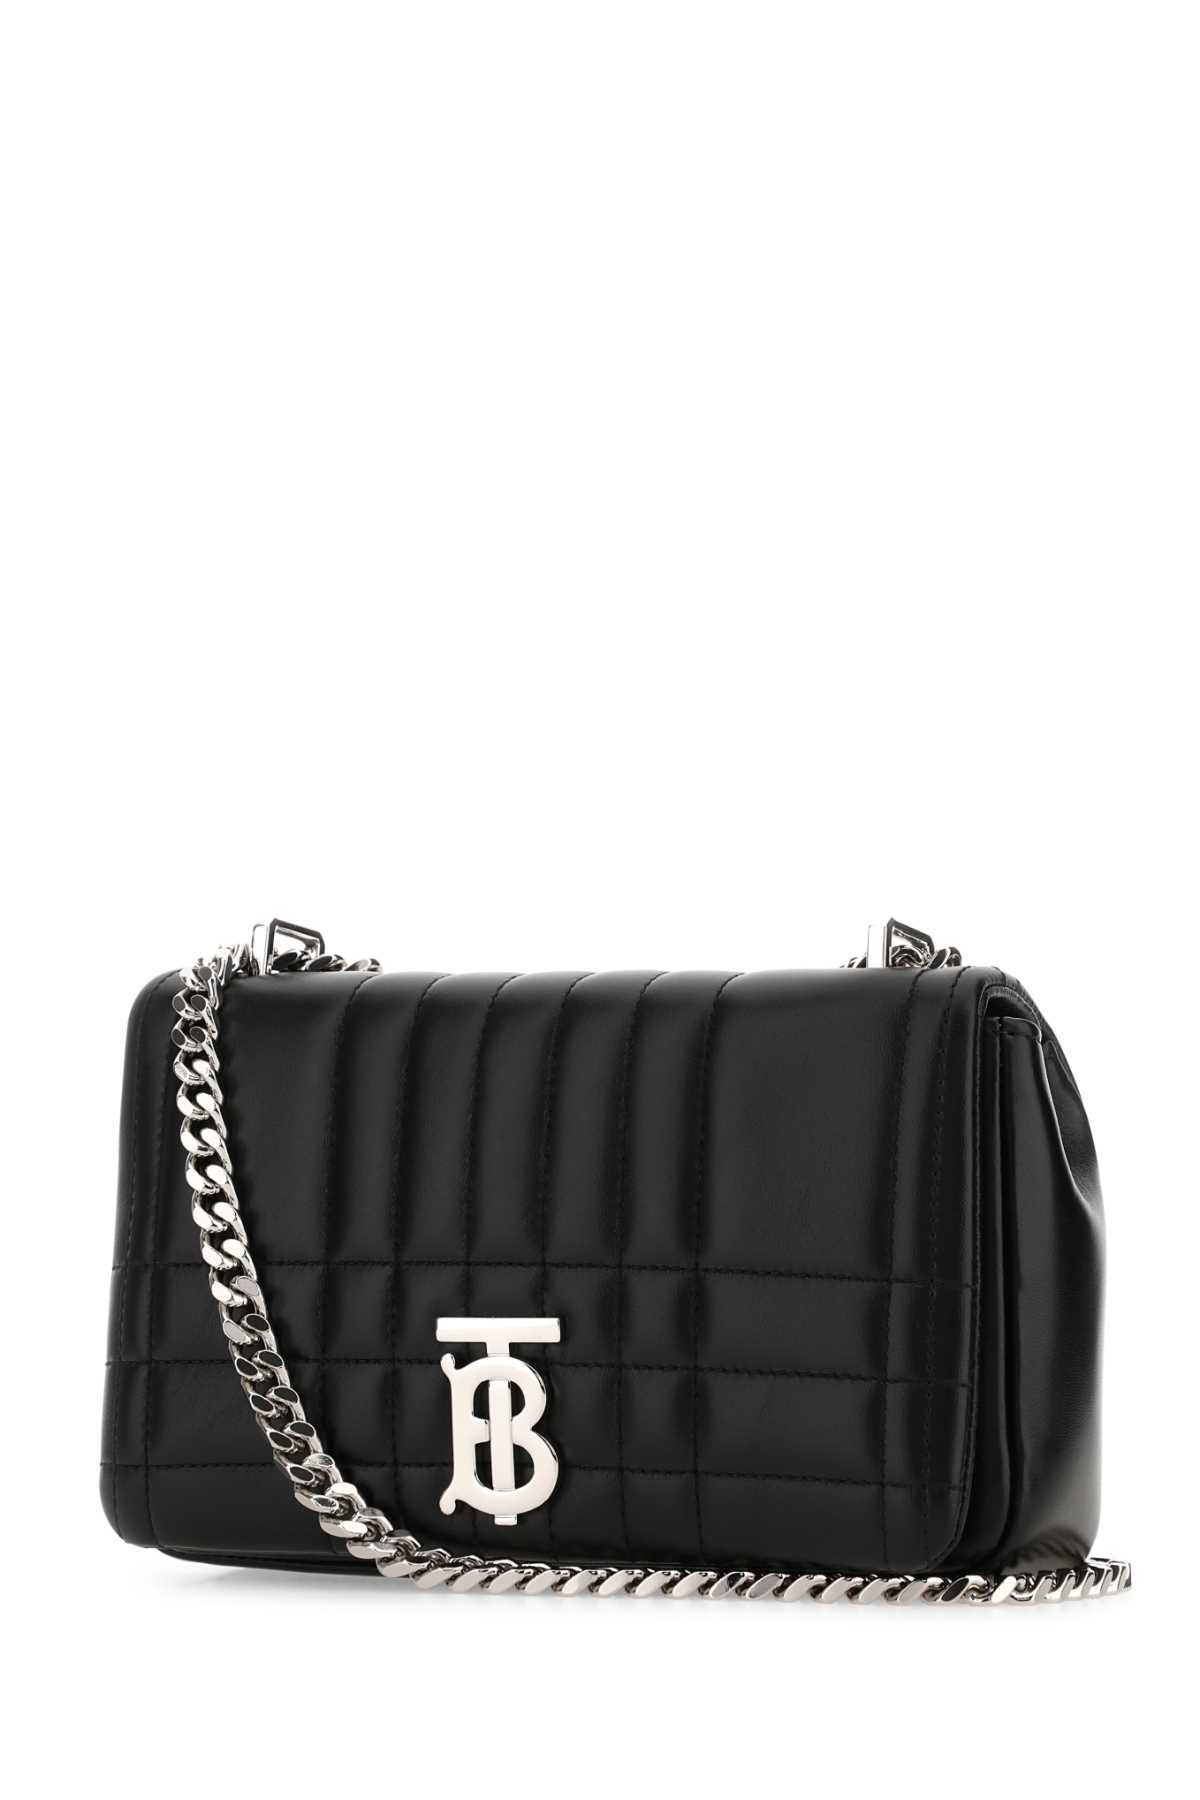 Shop Burberry Black Leather Small Lola Crossbody Bag